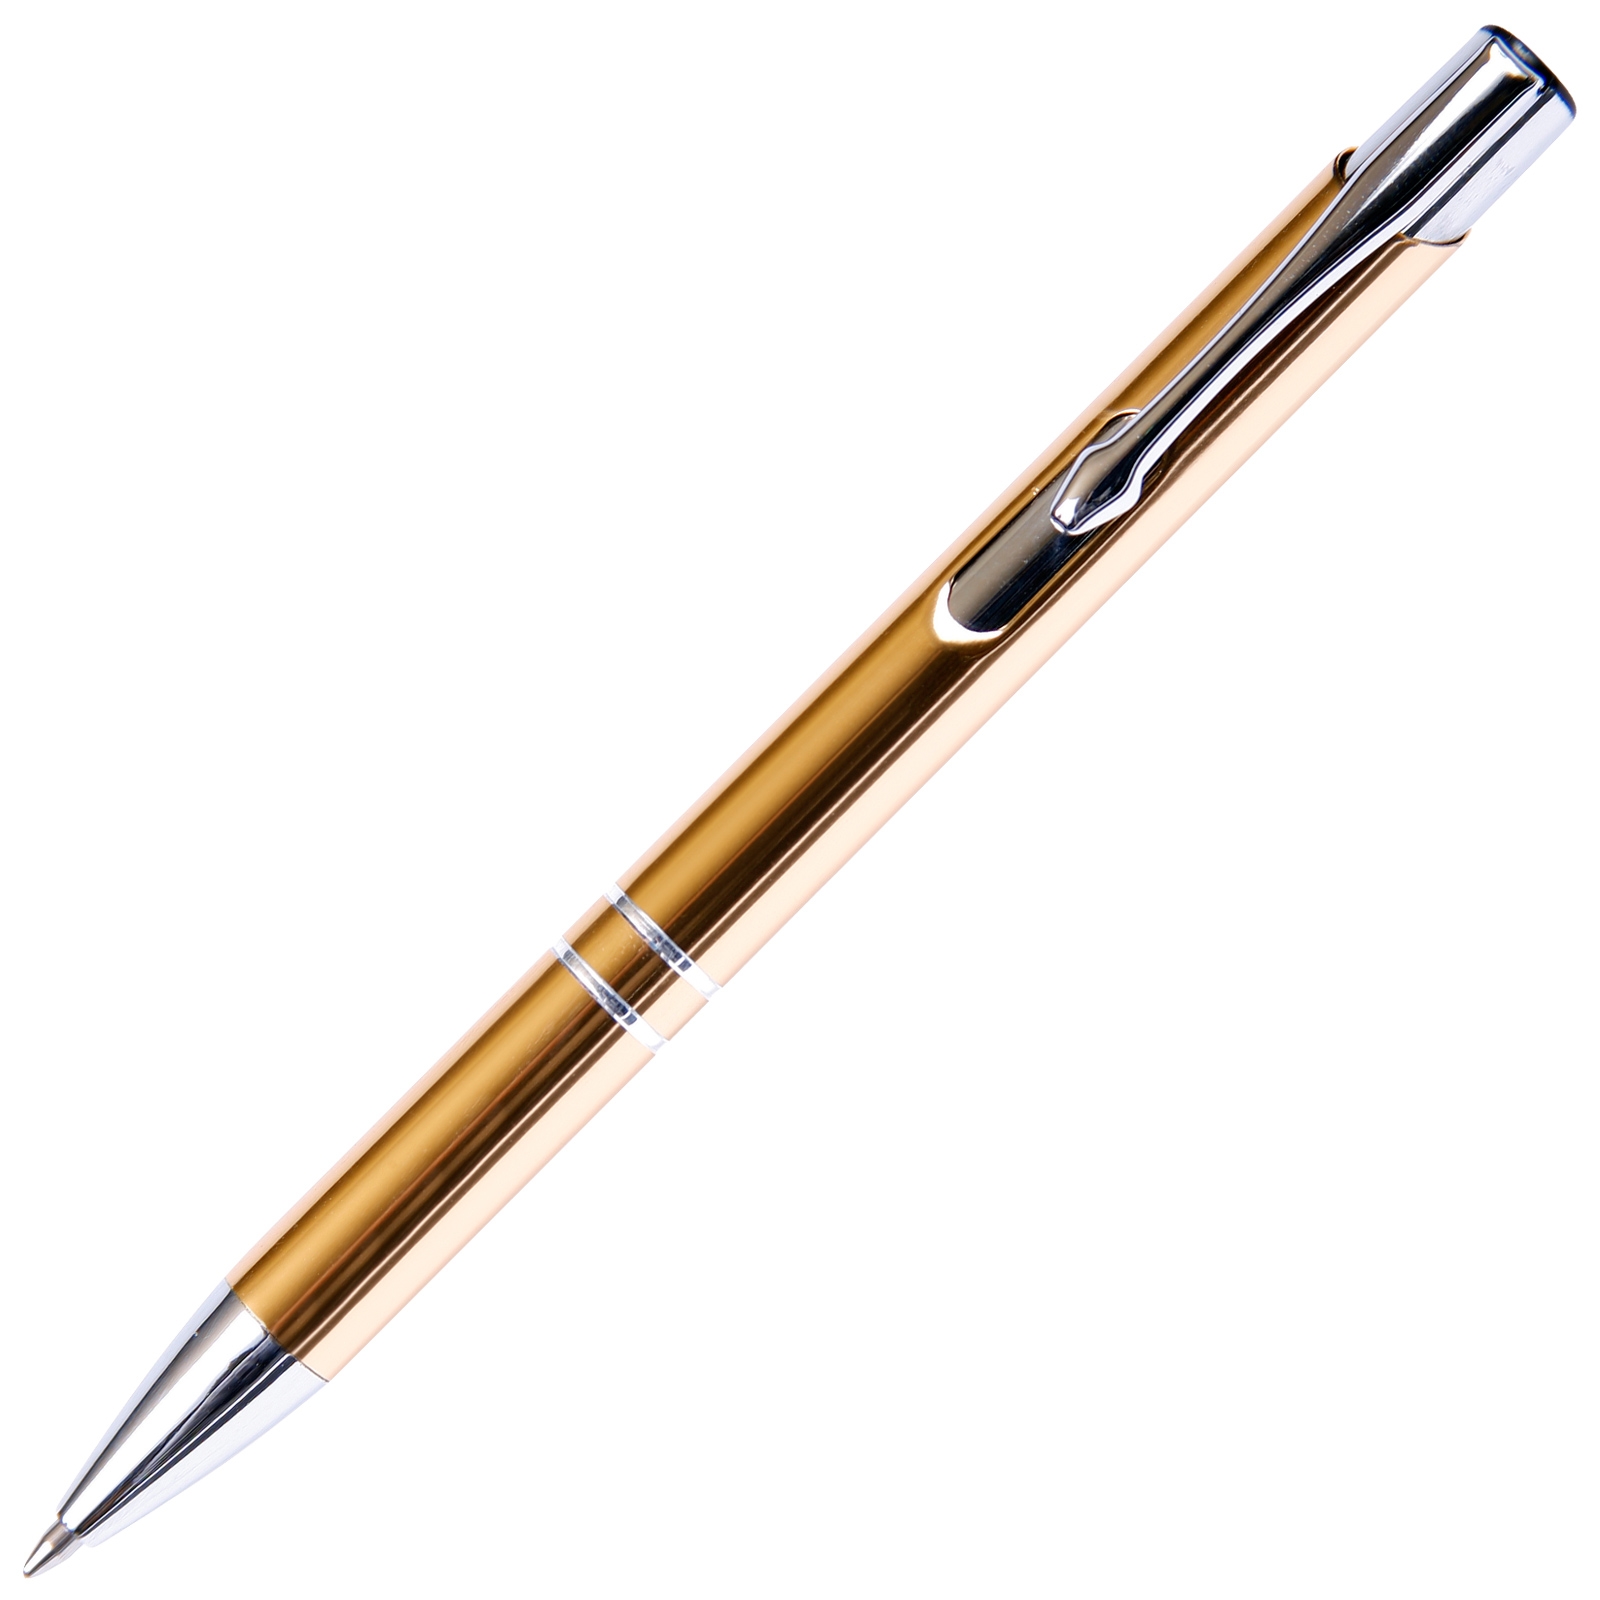 Budget Friendly JJ Ballpoint Pen - Gold with Medium Tip Point By Lanier Pens